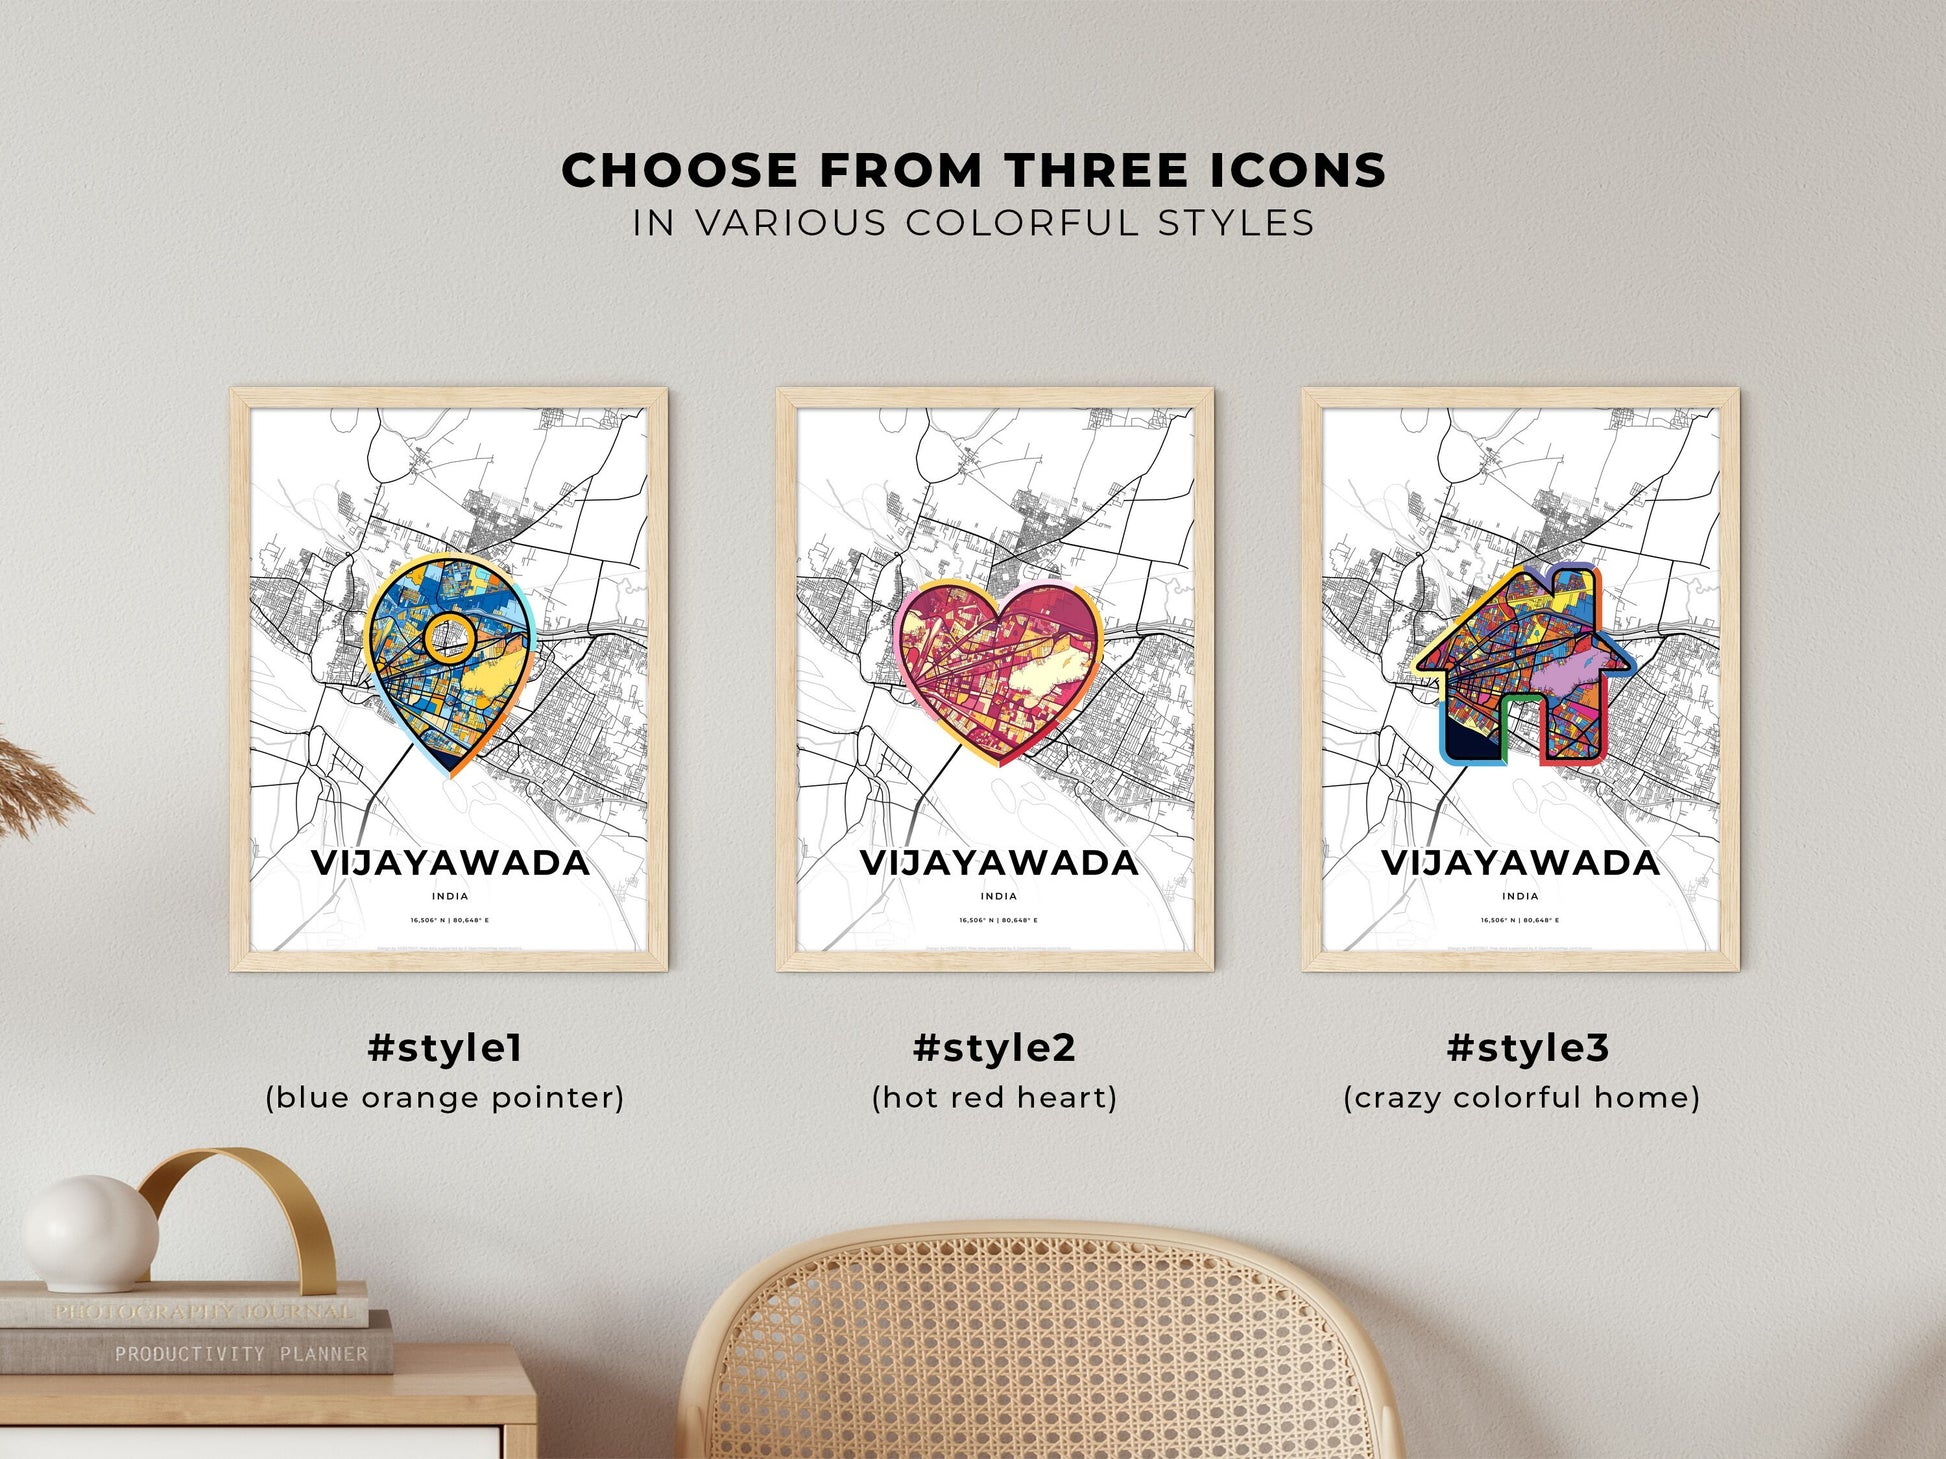 VIJAYAWADA INDIA minimal art map with a colorful icon.